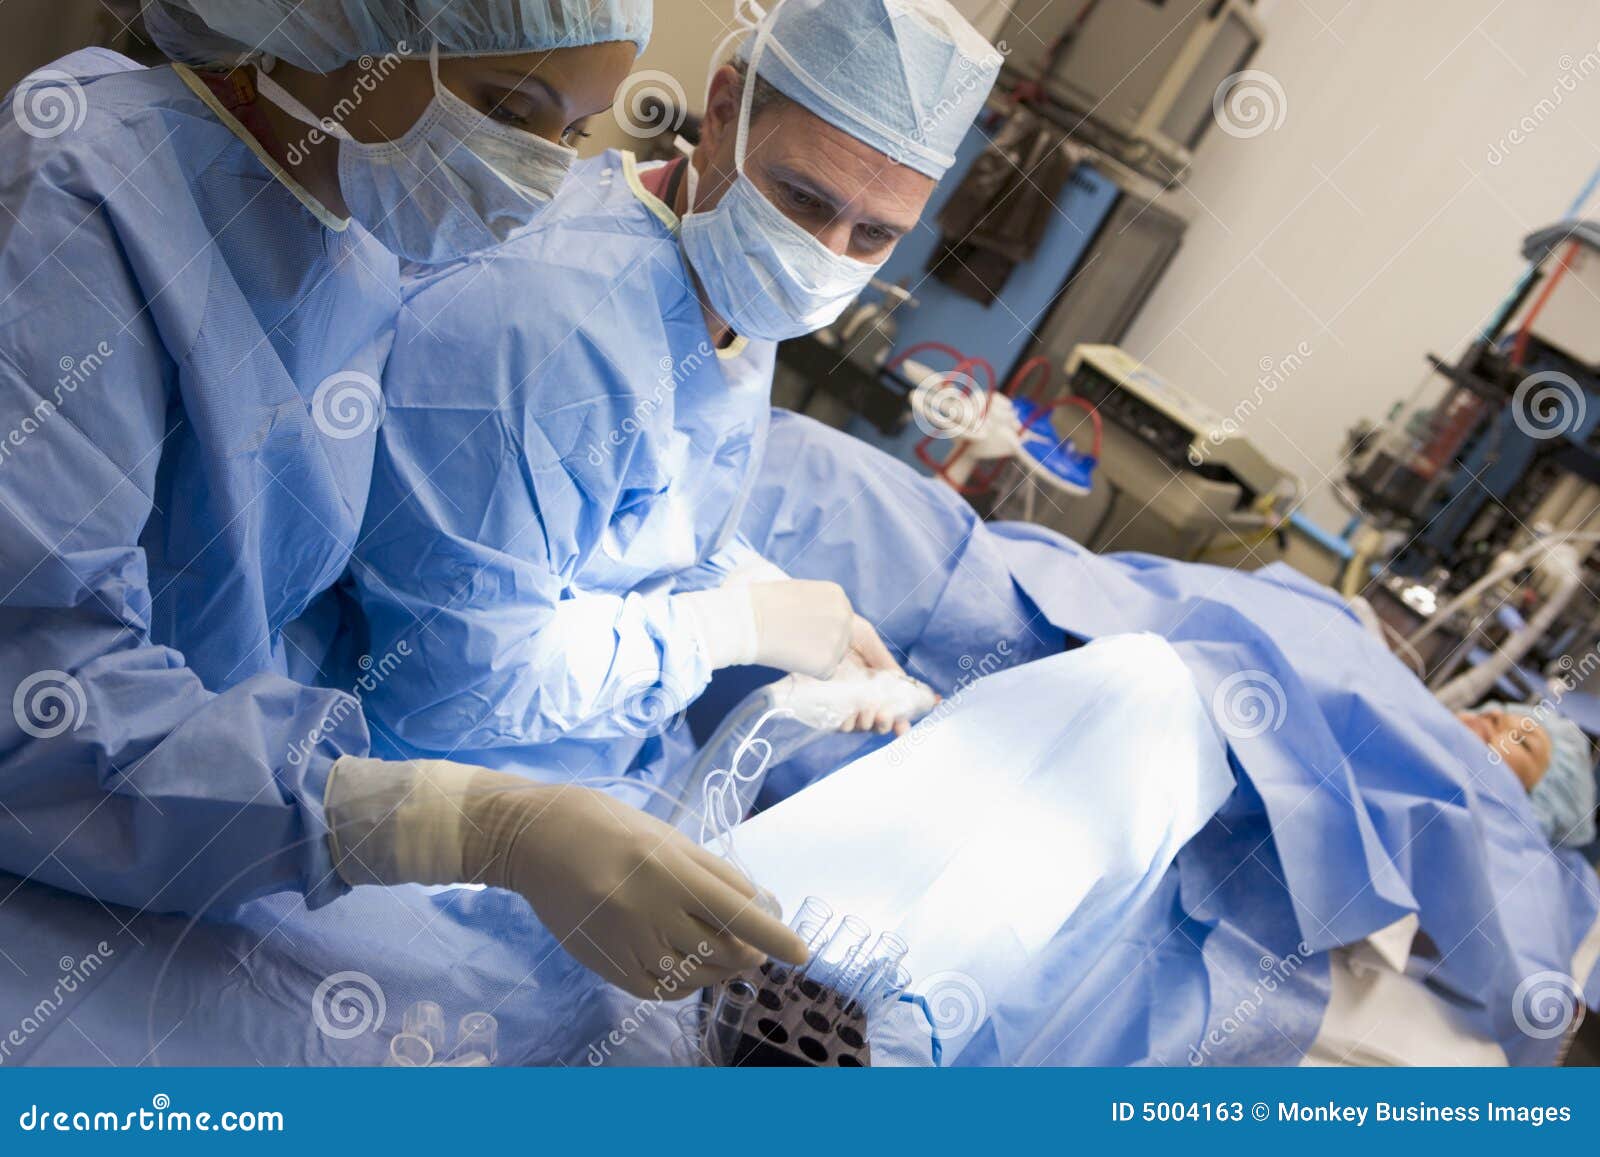 woman undergoing egg retrieval procedure